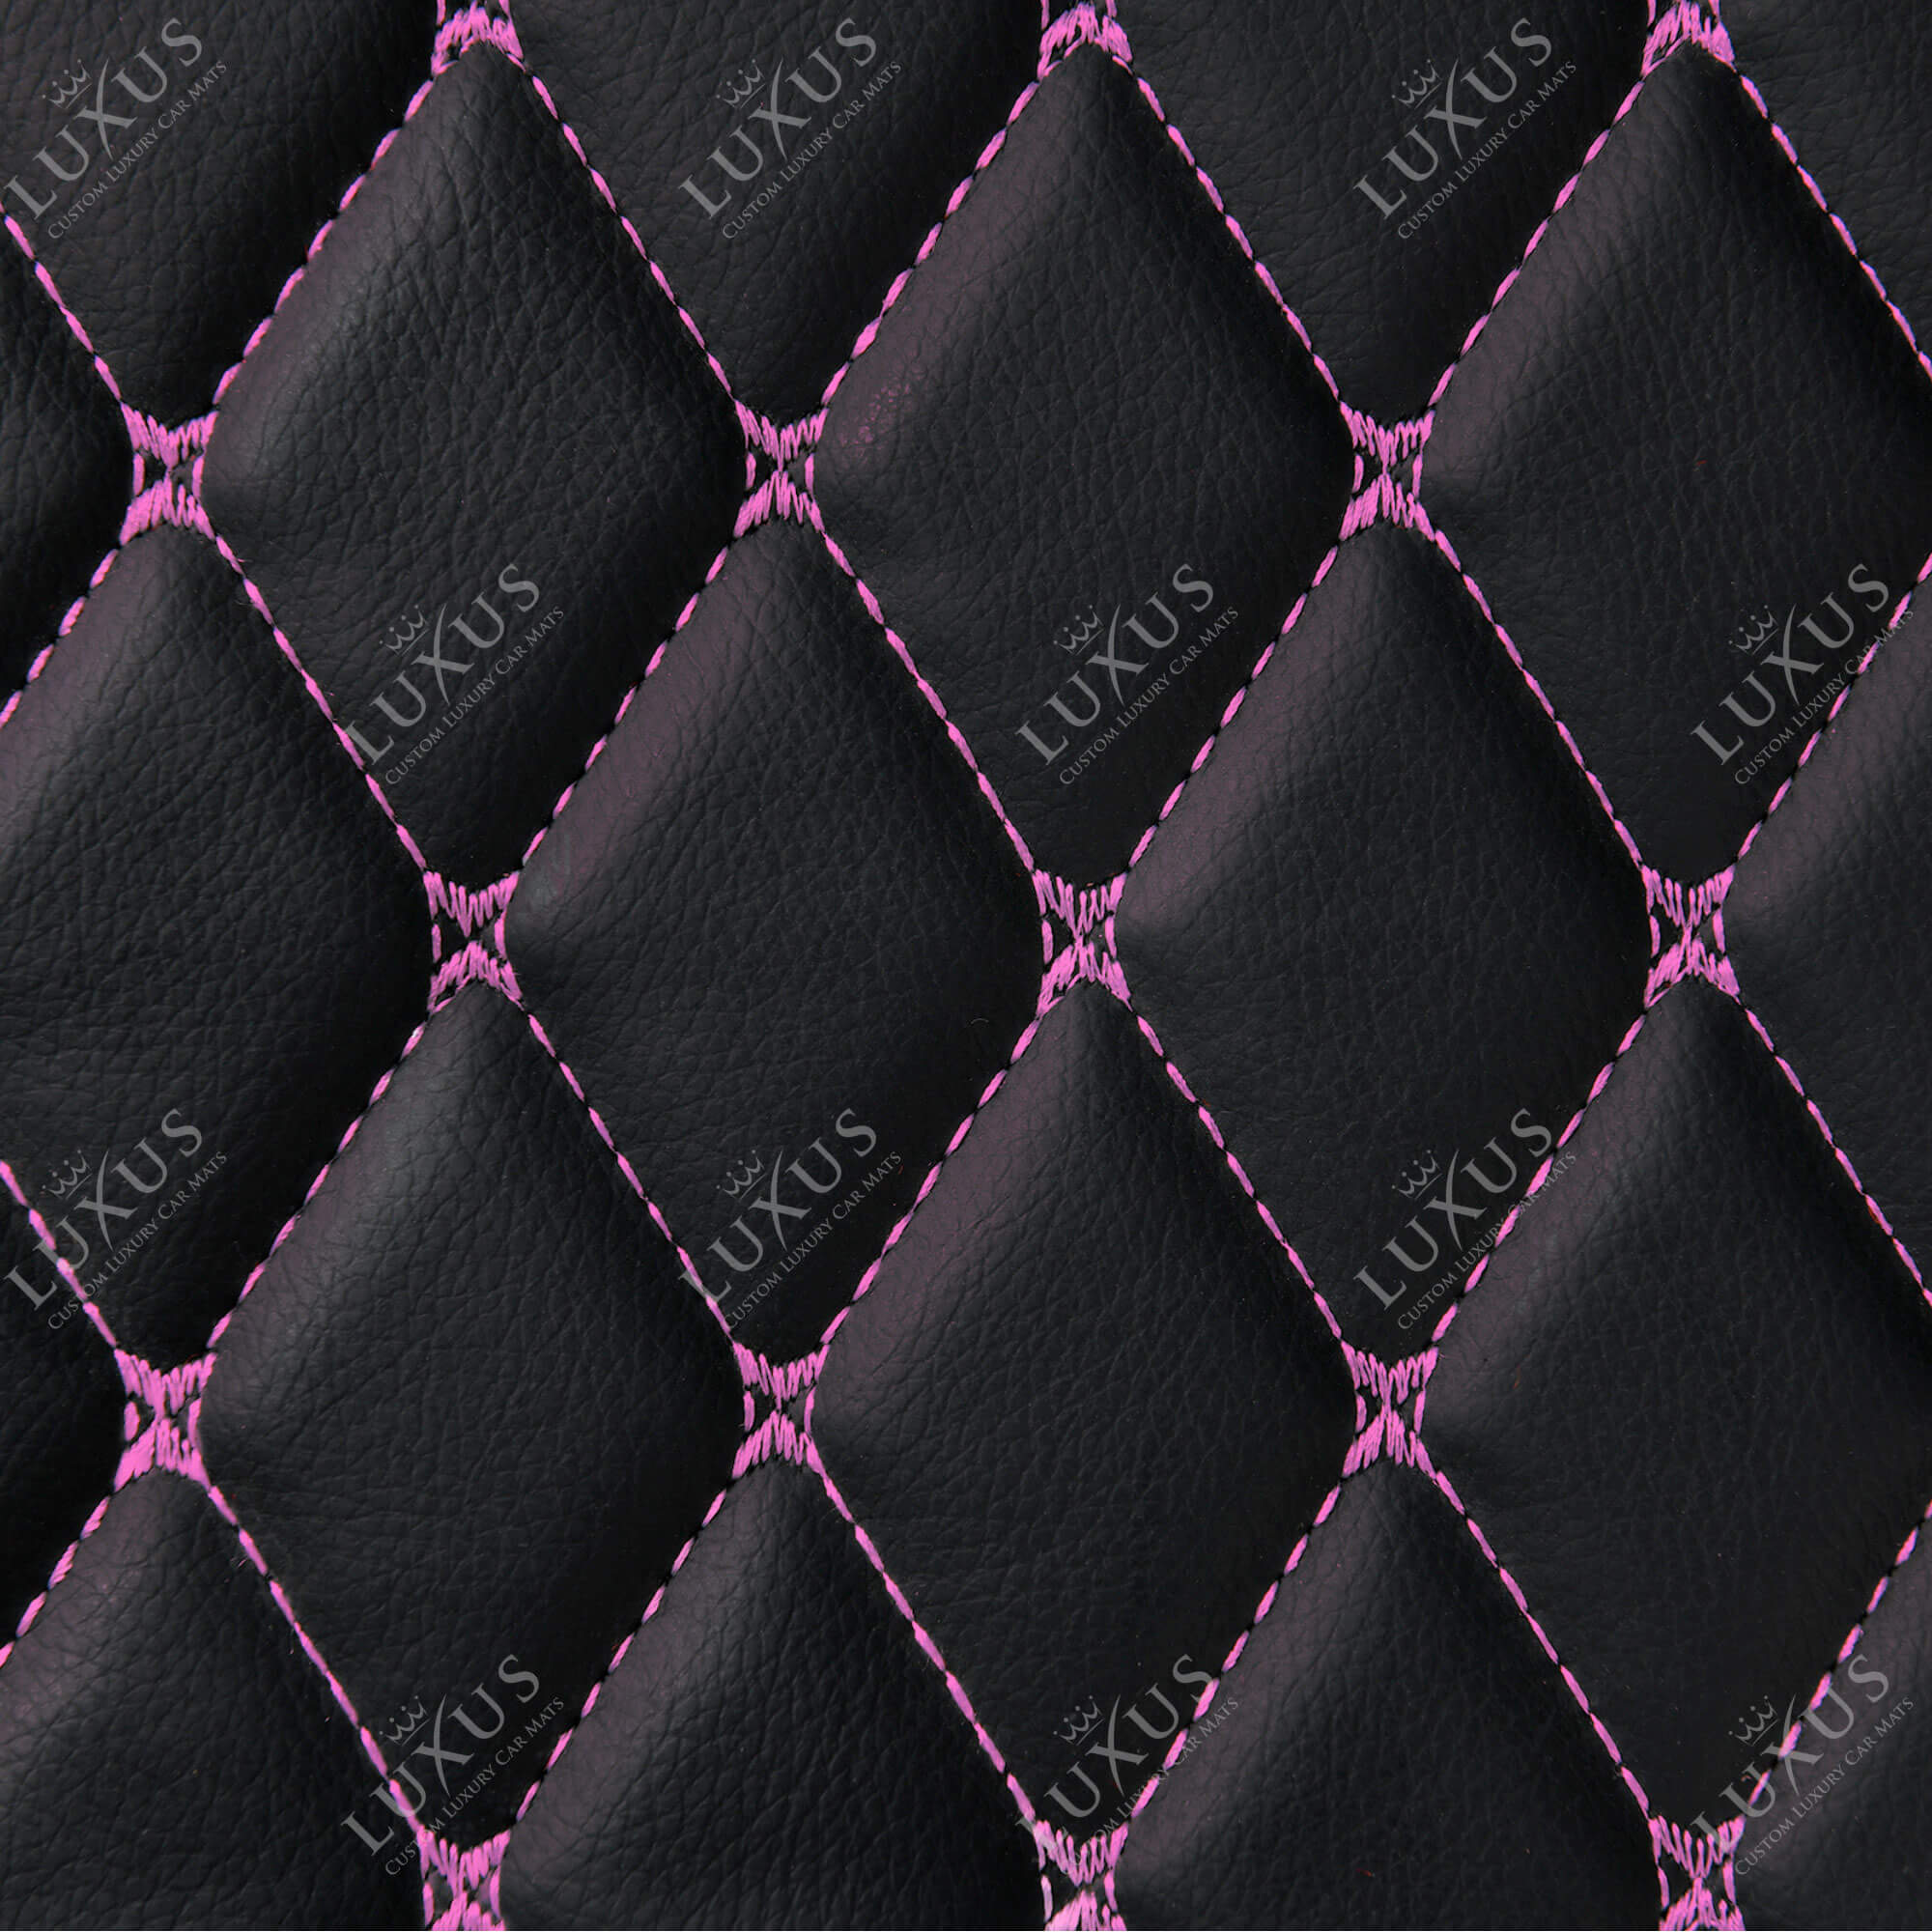 Luxus Car Mats™ - svart og lilla søm Luksus bilmattesett